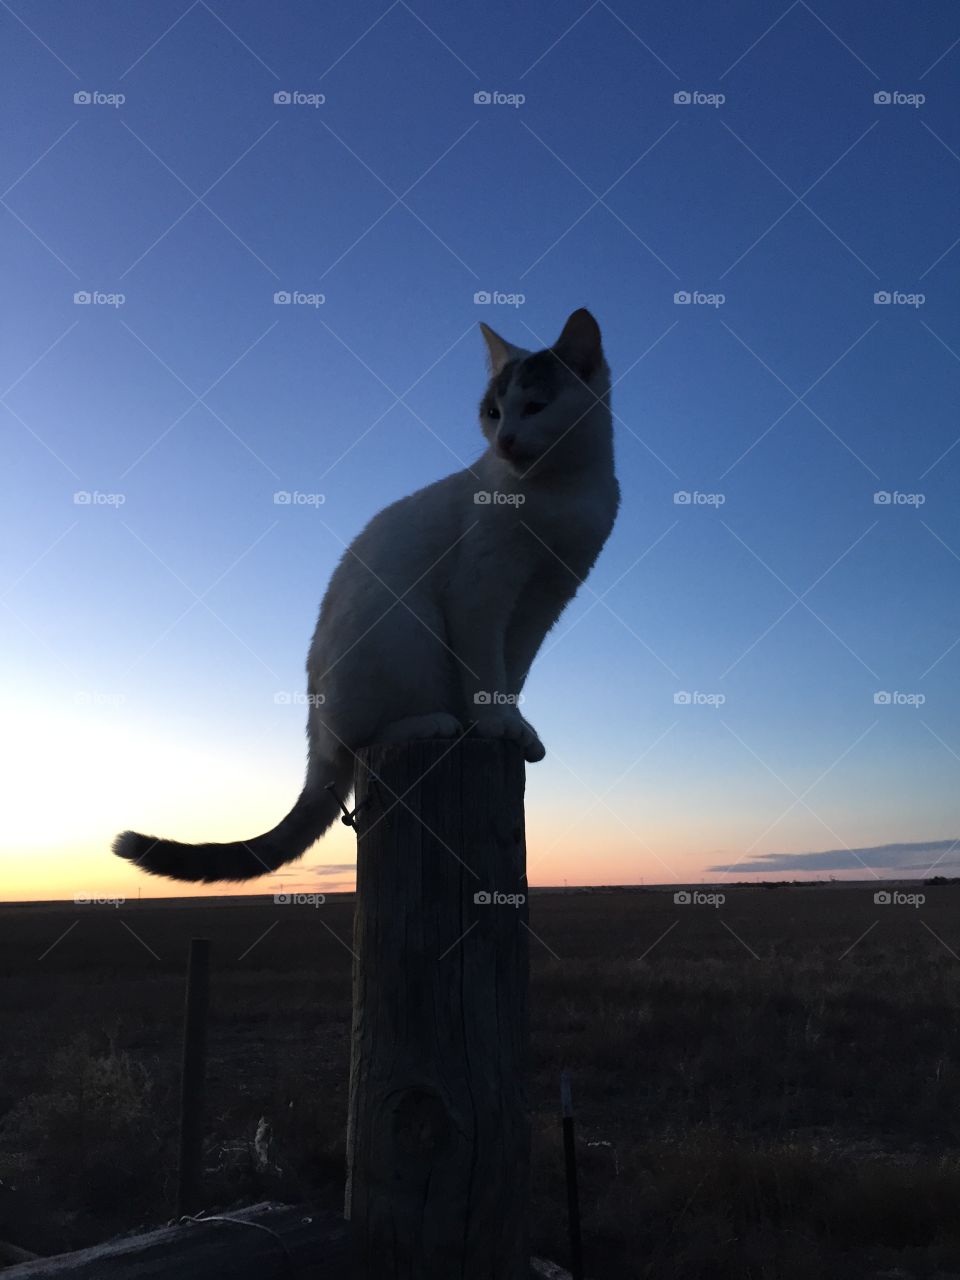 Barn cat sitting on a post